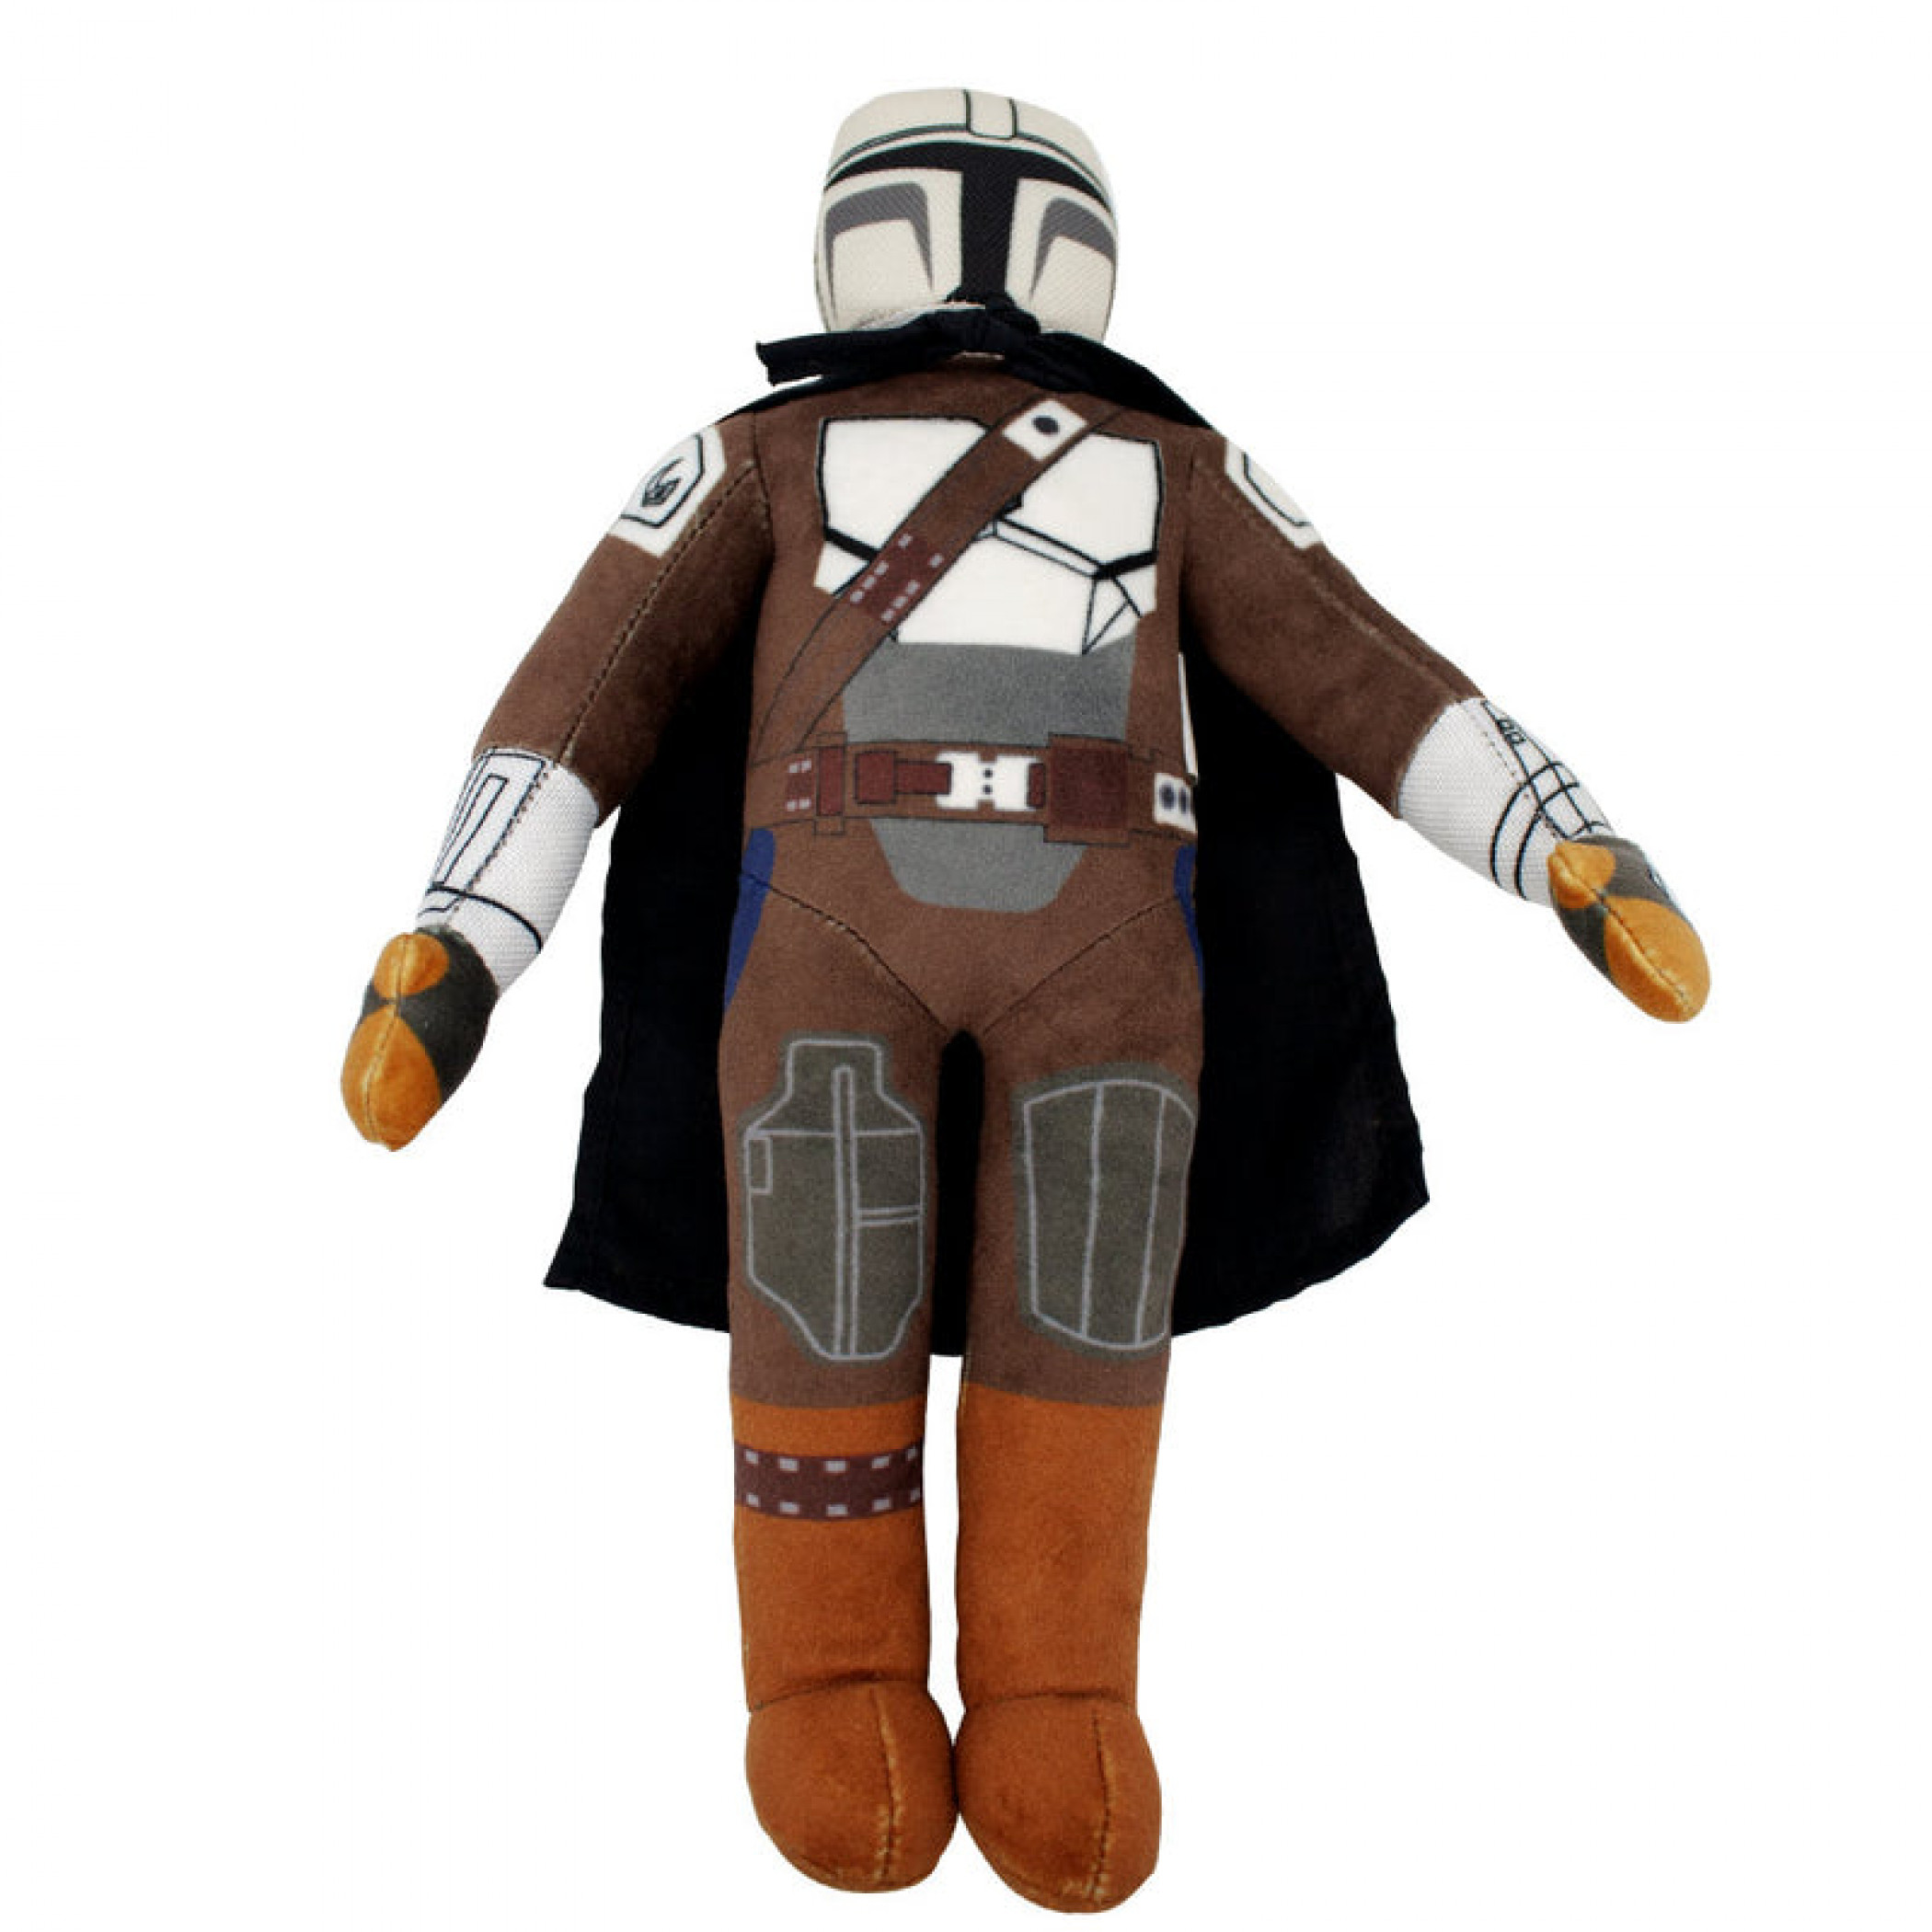 Star Wars The Mandalorian Standing Figure Pose Plush Squeaky Dog Toy